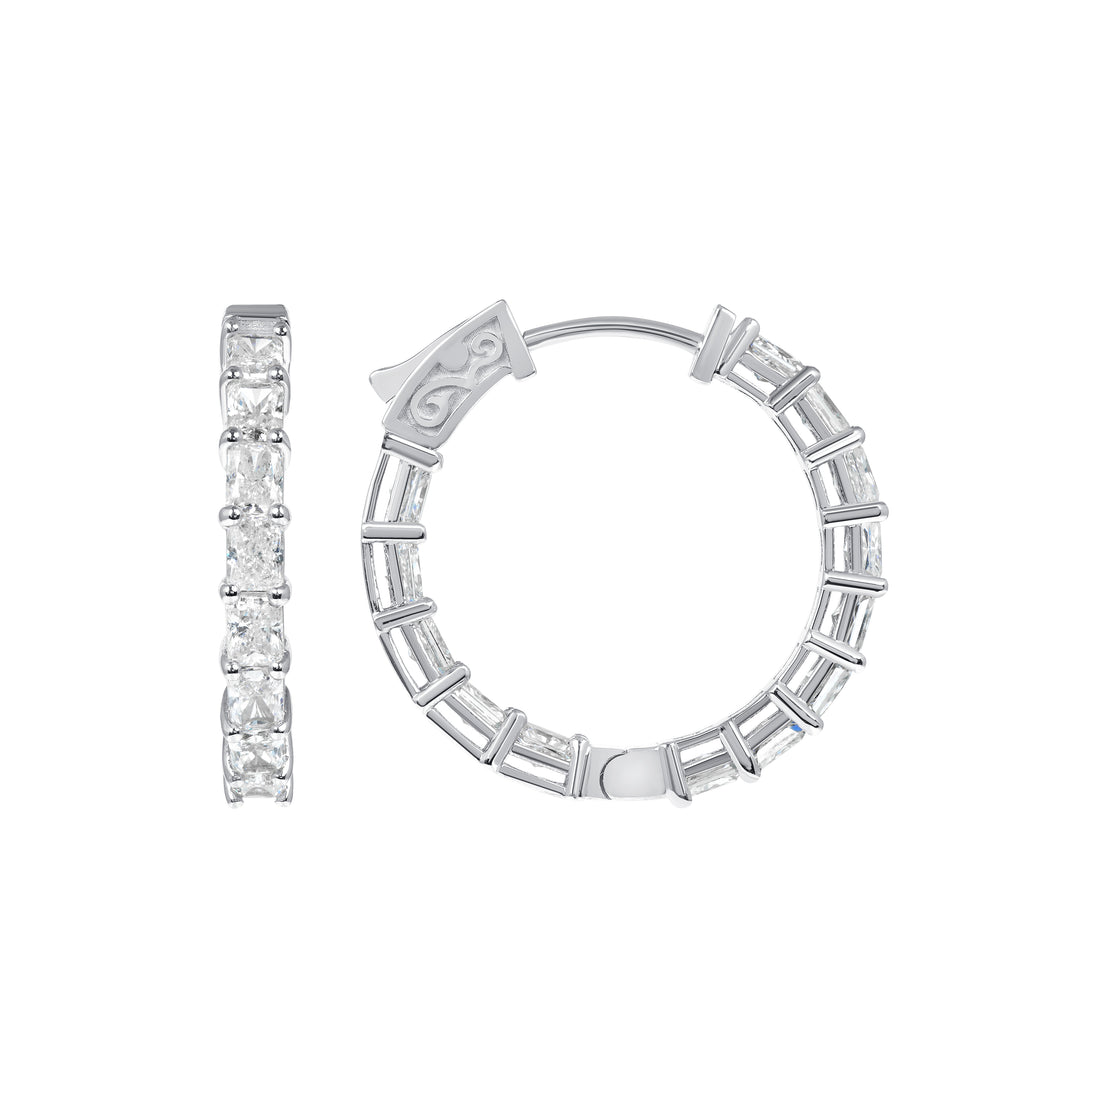 3.85 CT. Radiant Cut Diamond Hoop Earrings in 14K White Gold